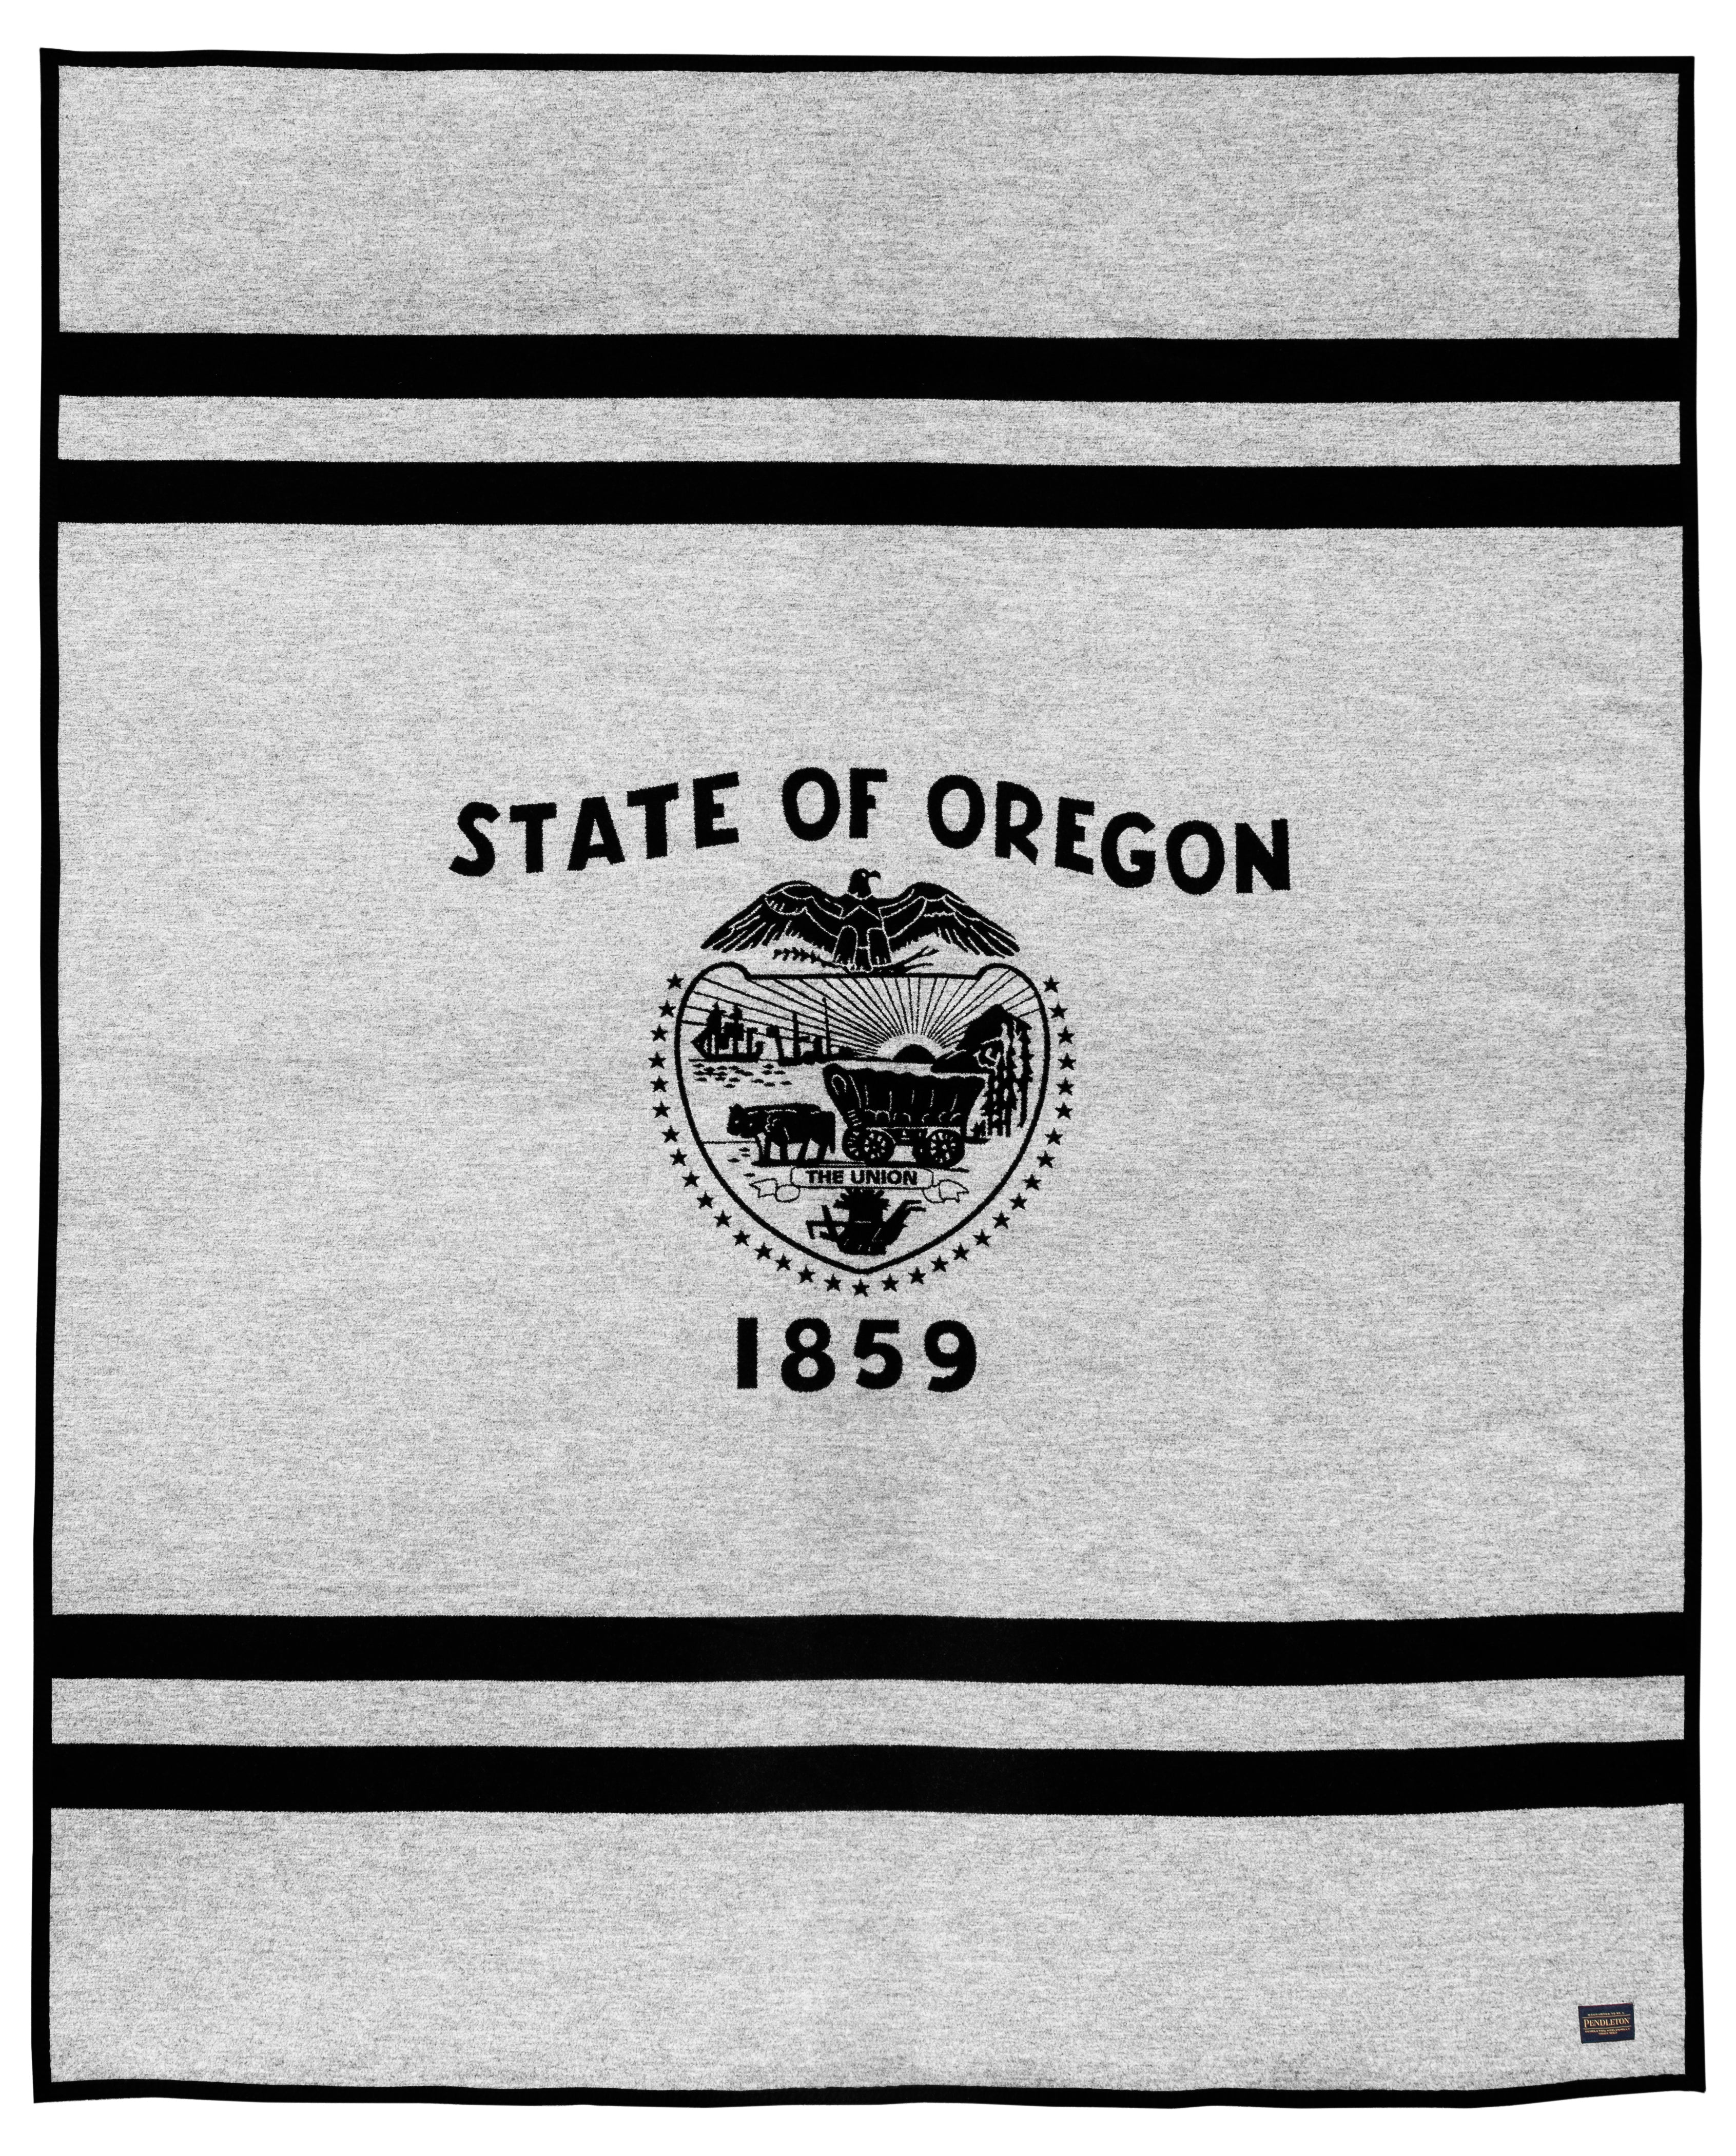 The Oregon Blanket